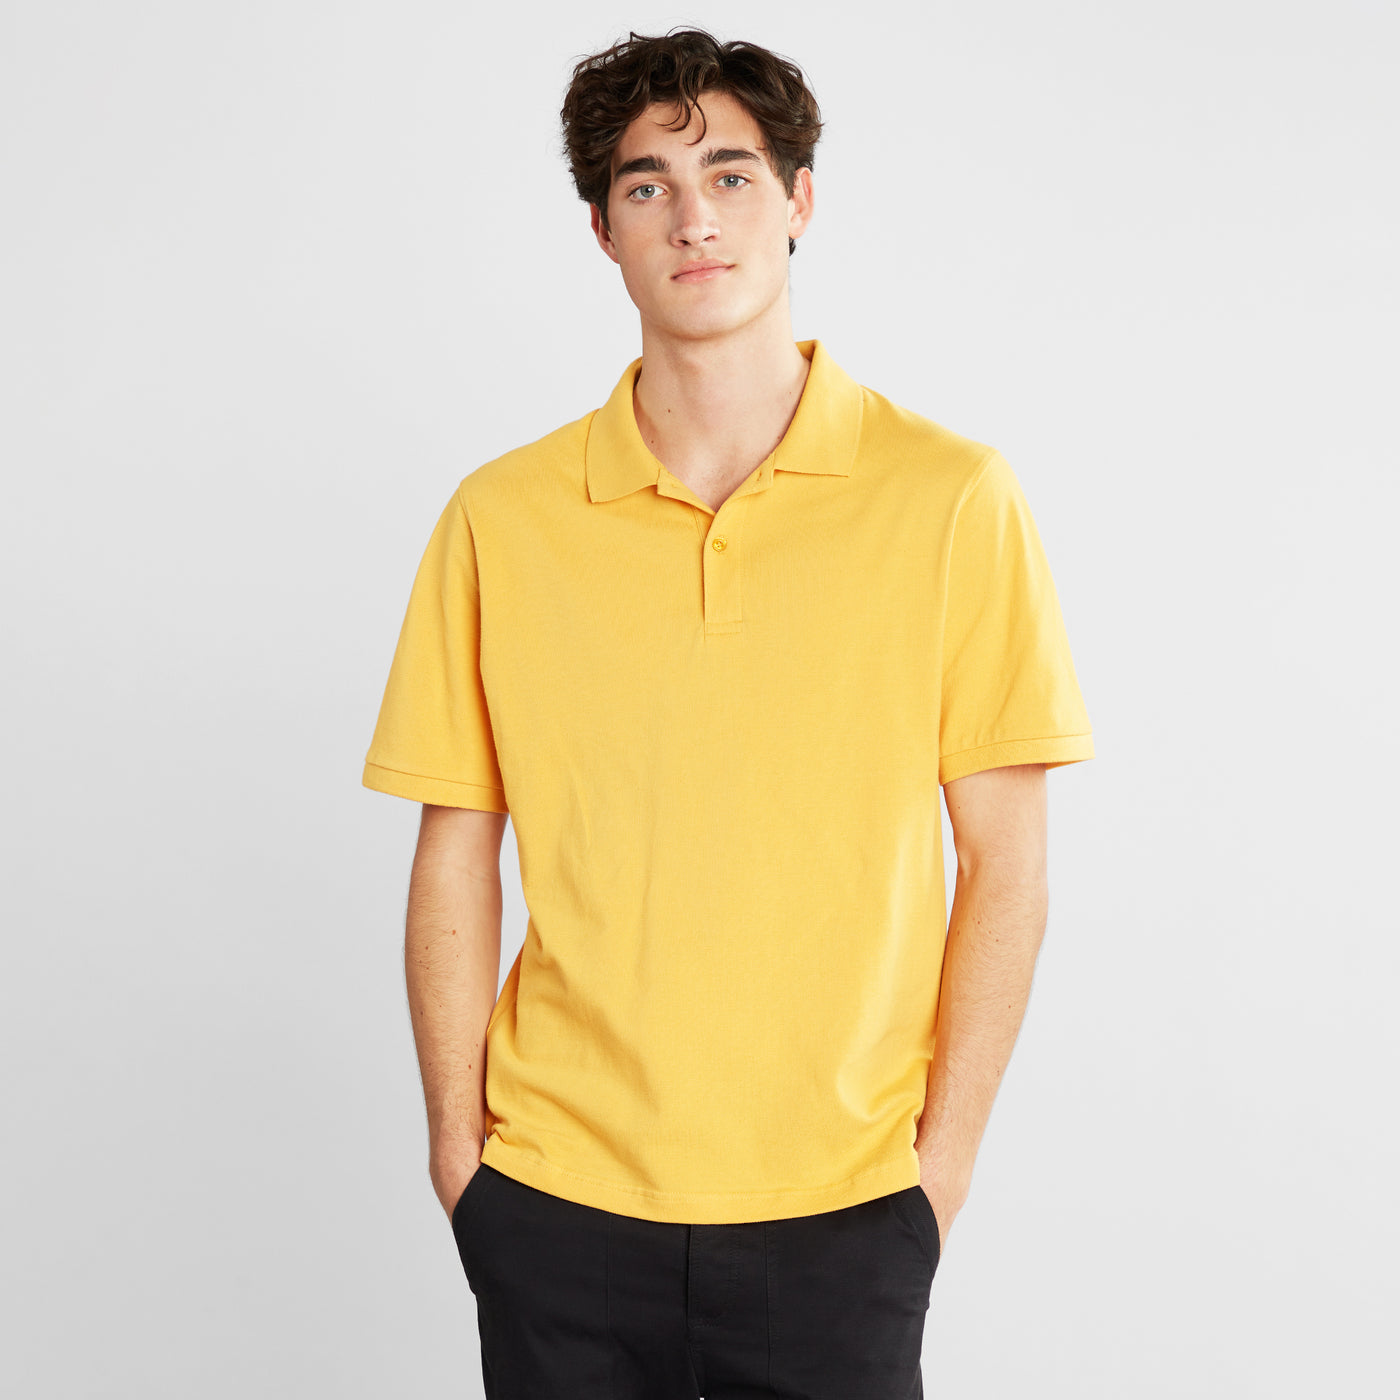 Polo Shirt Vaxholm Honey Yellow in gelb.